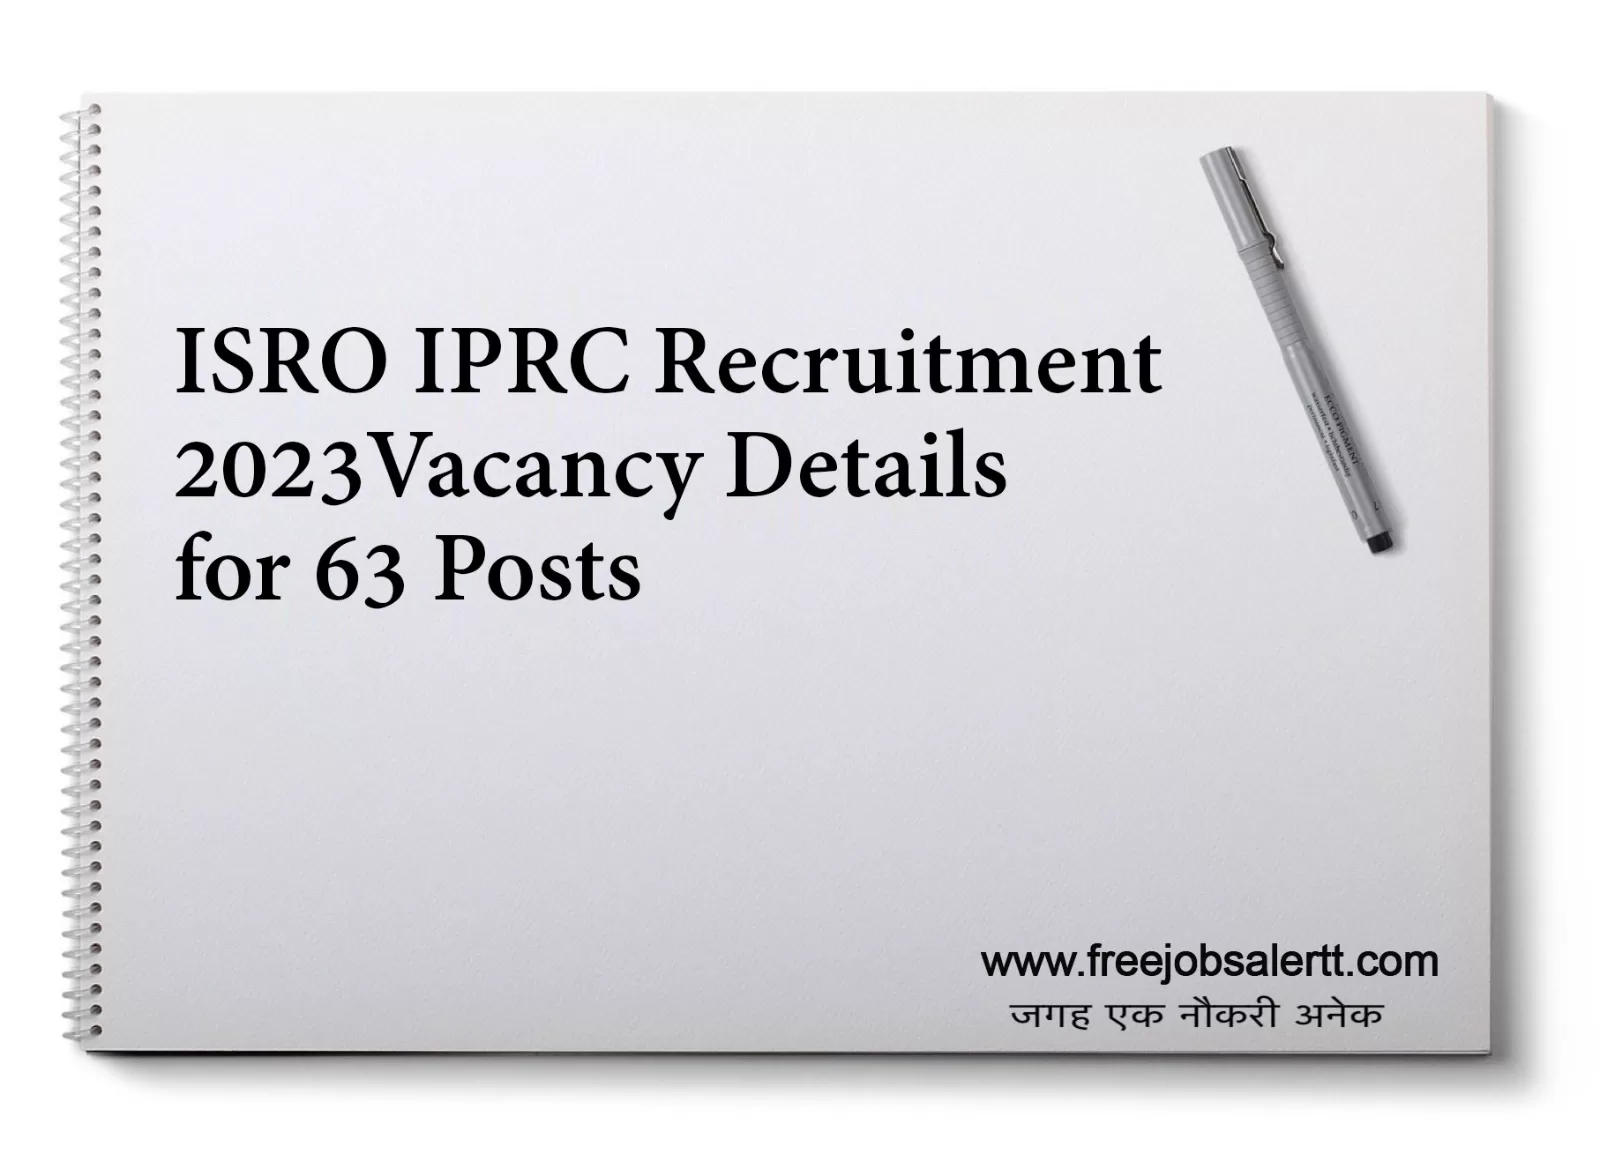 IPRC Recruitment Vacancy Details